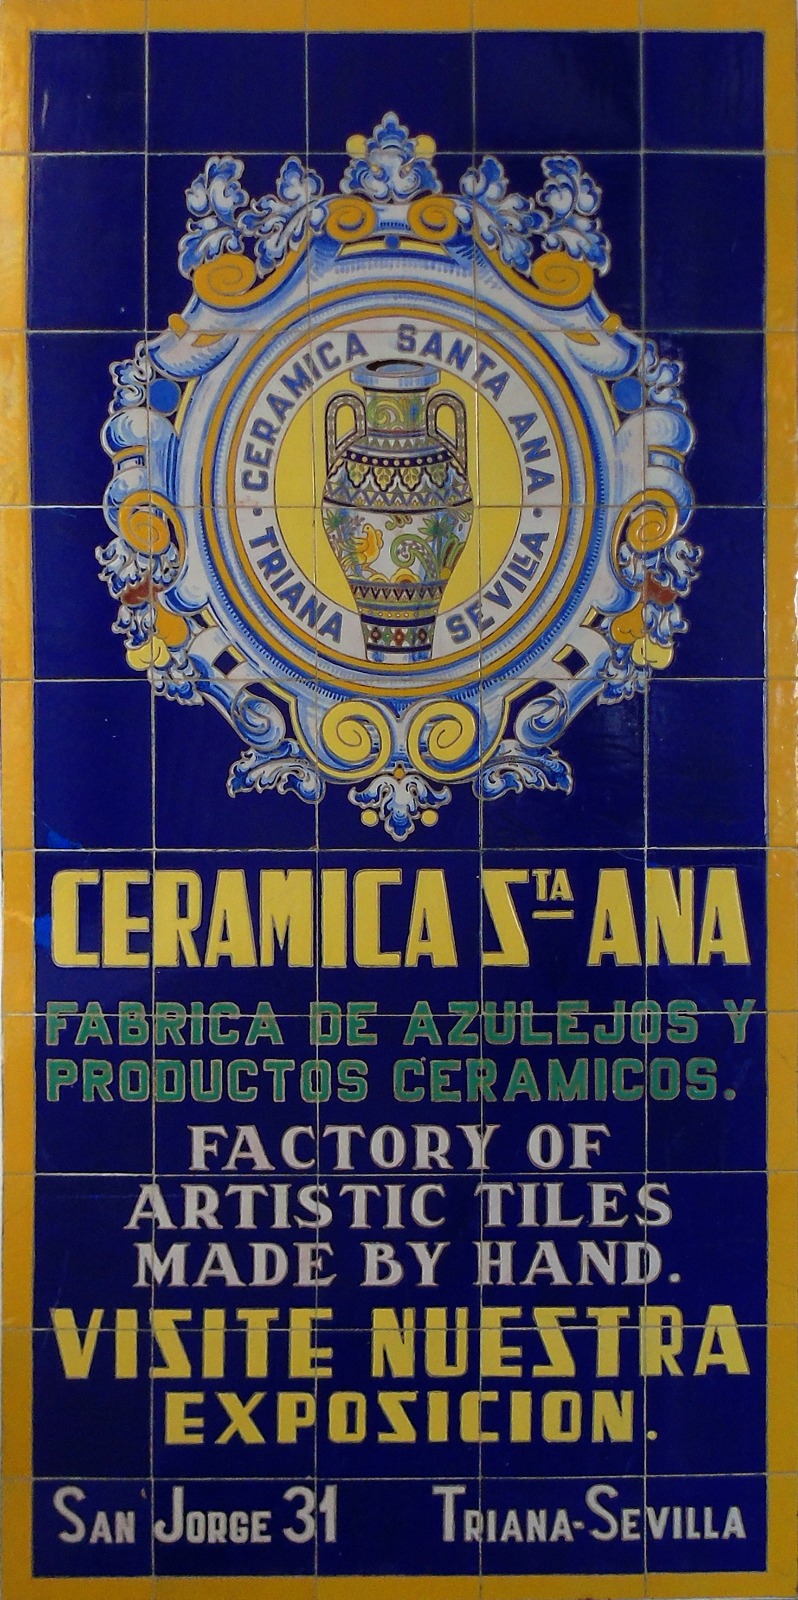 00118. Panel publicitario de cerámica Santa Ana. Centro Cerámica Triana. Sevilla